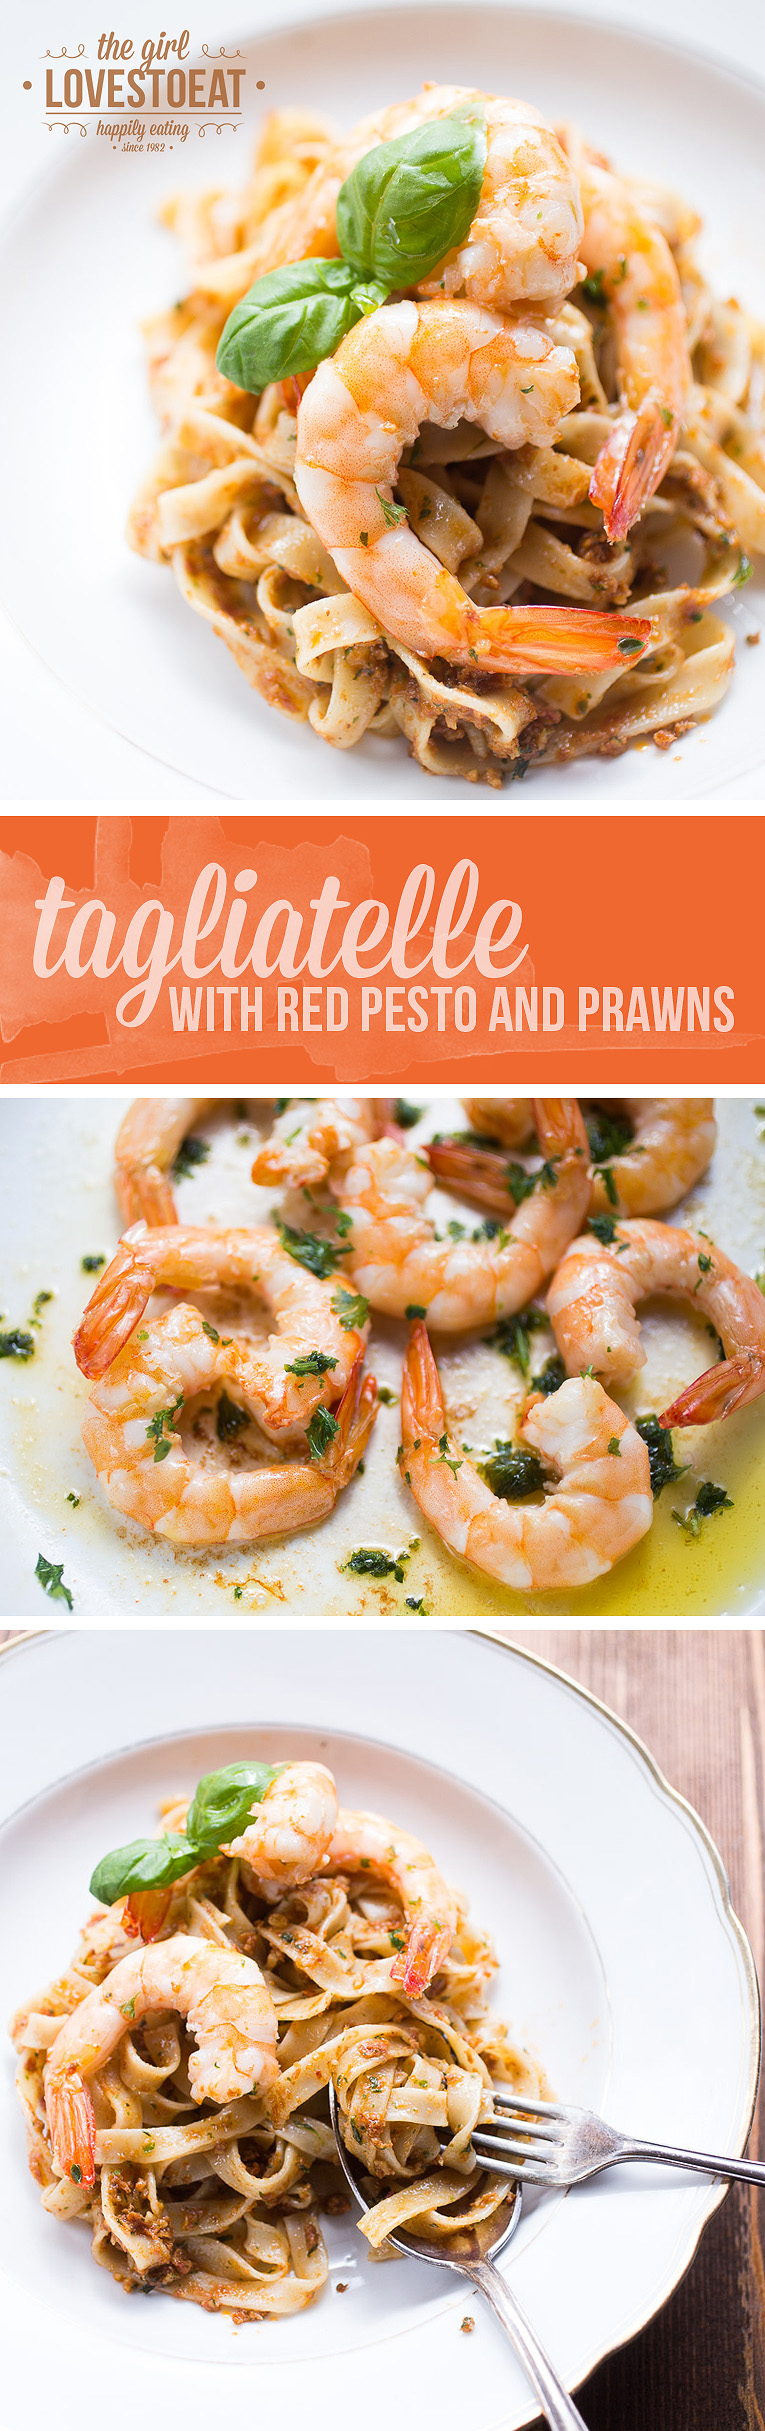 Tagliatelle with prawns and red pesto